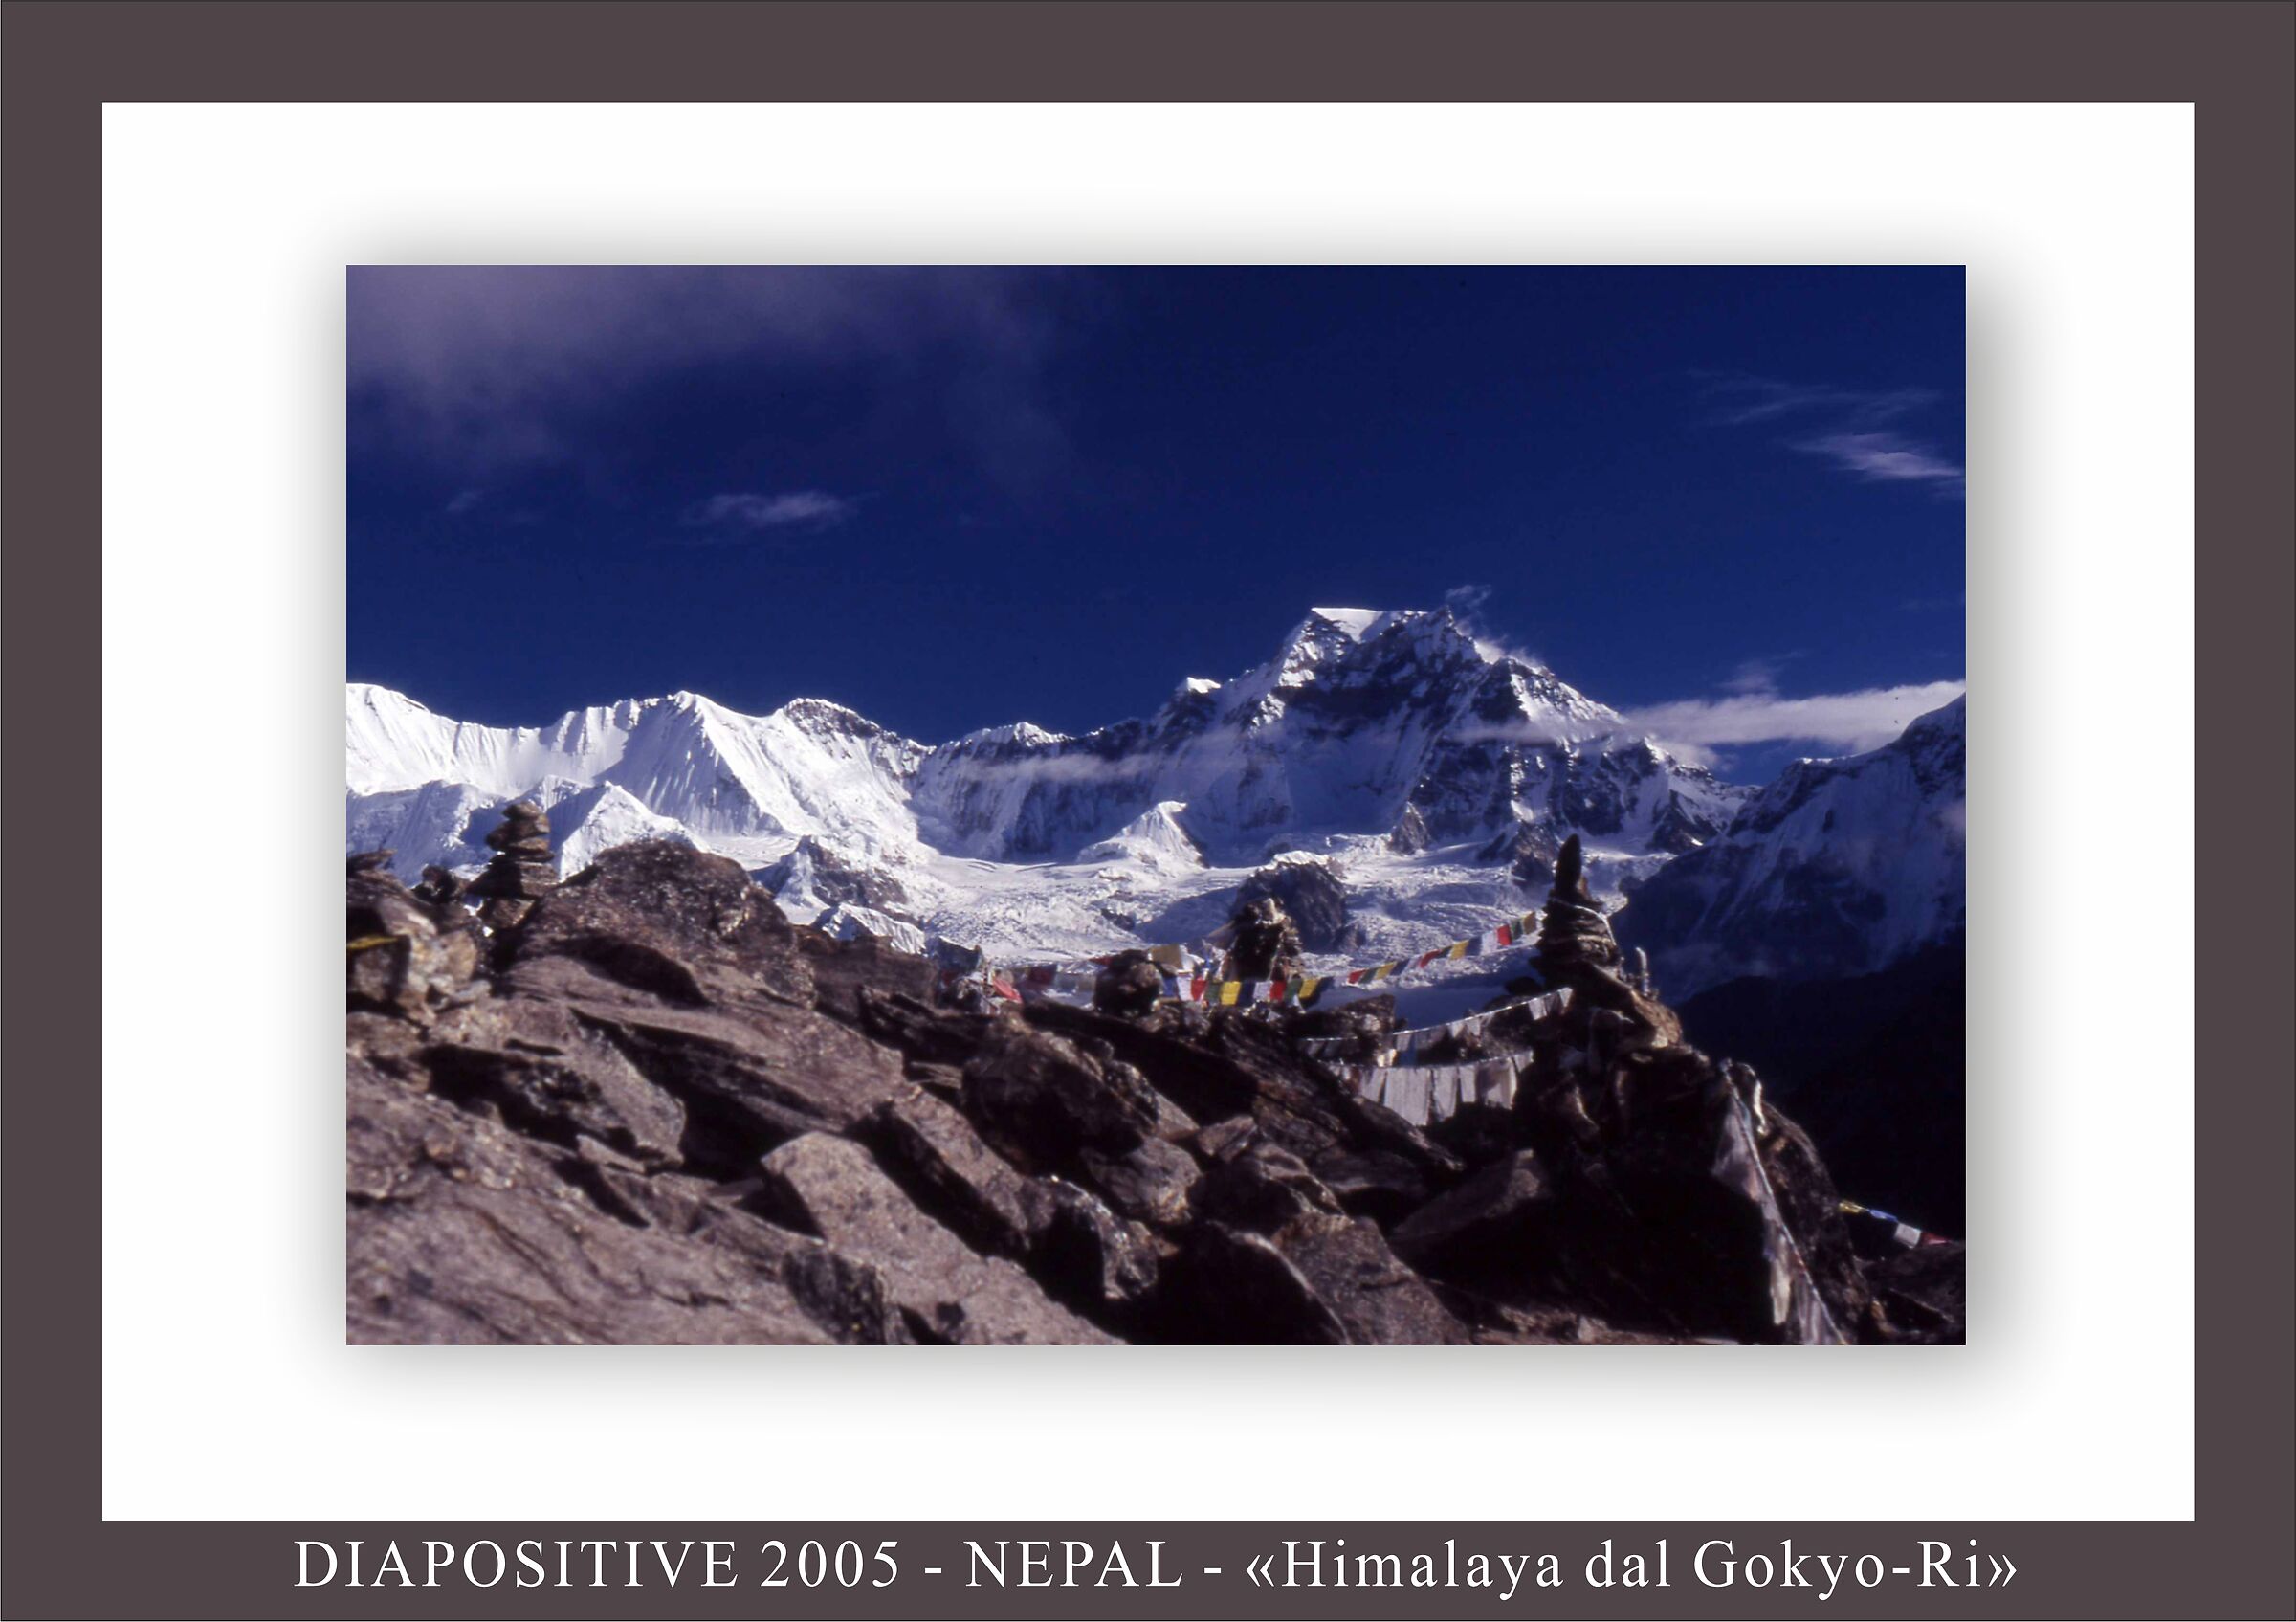 Himalayas from Gokyo-Ri...